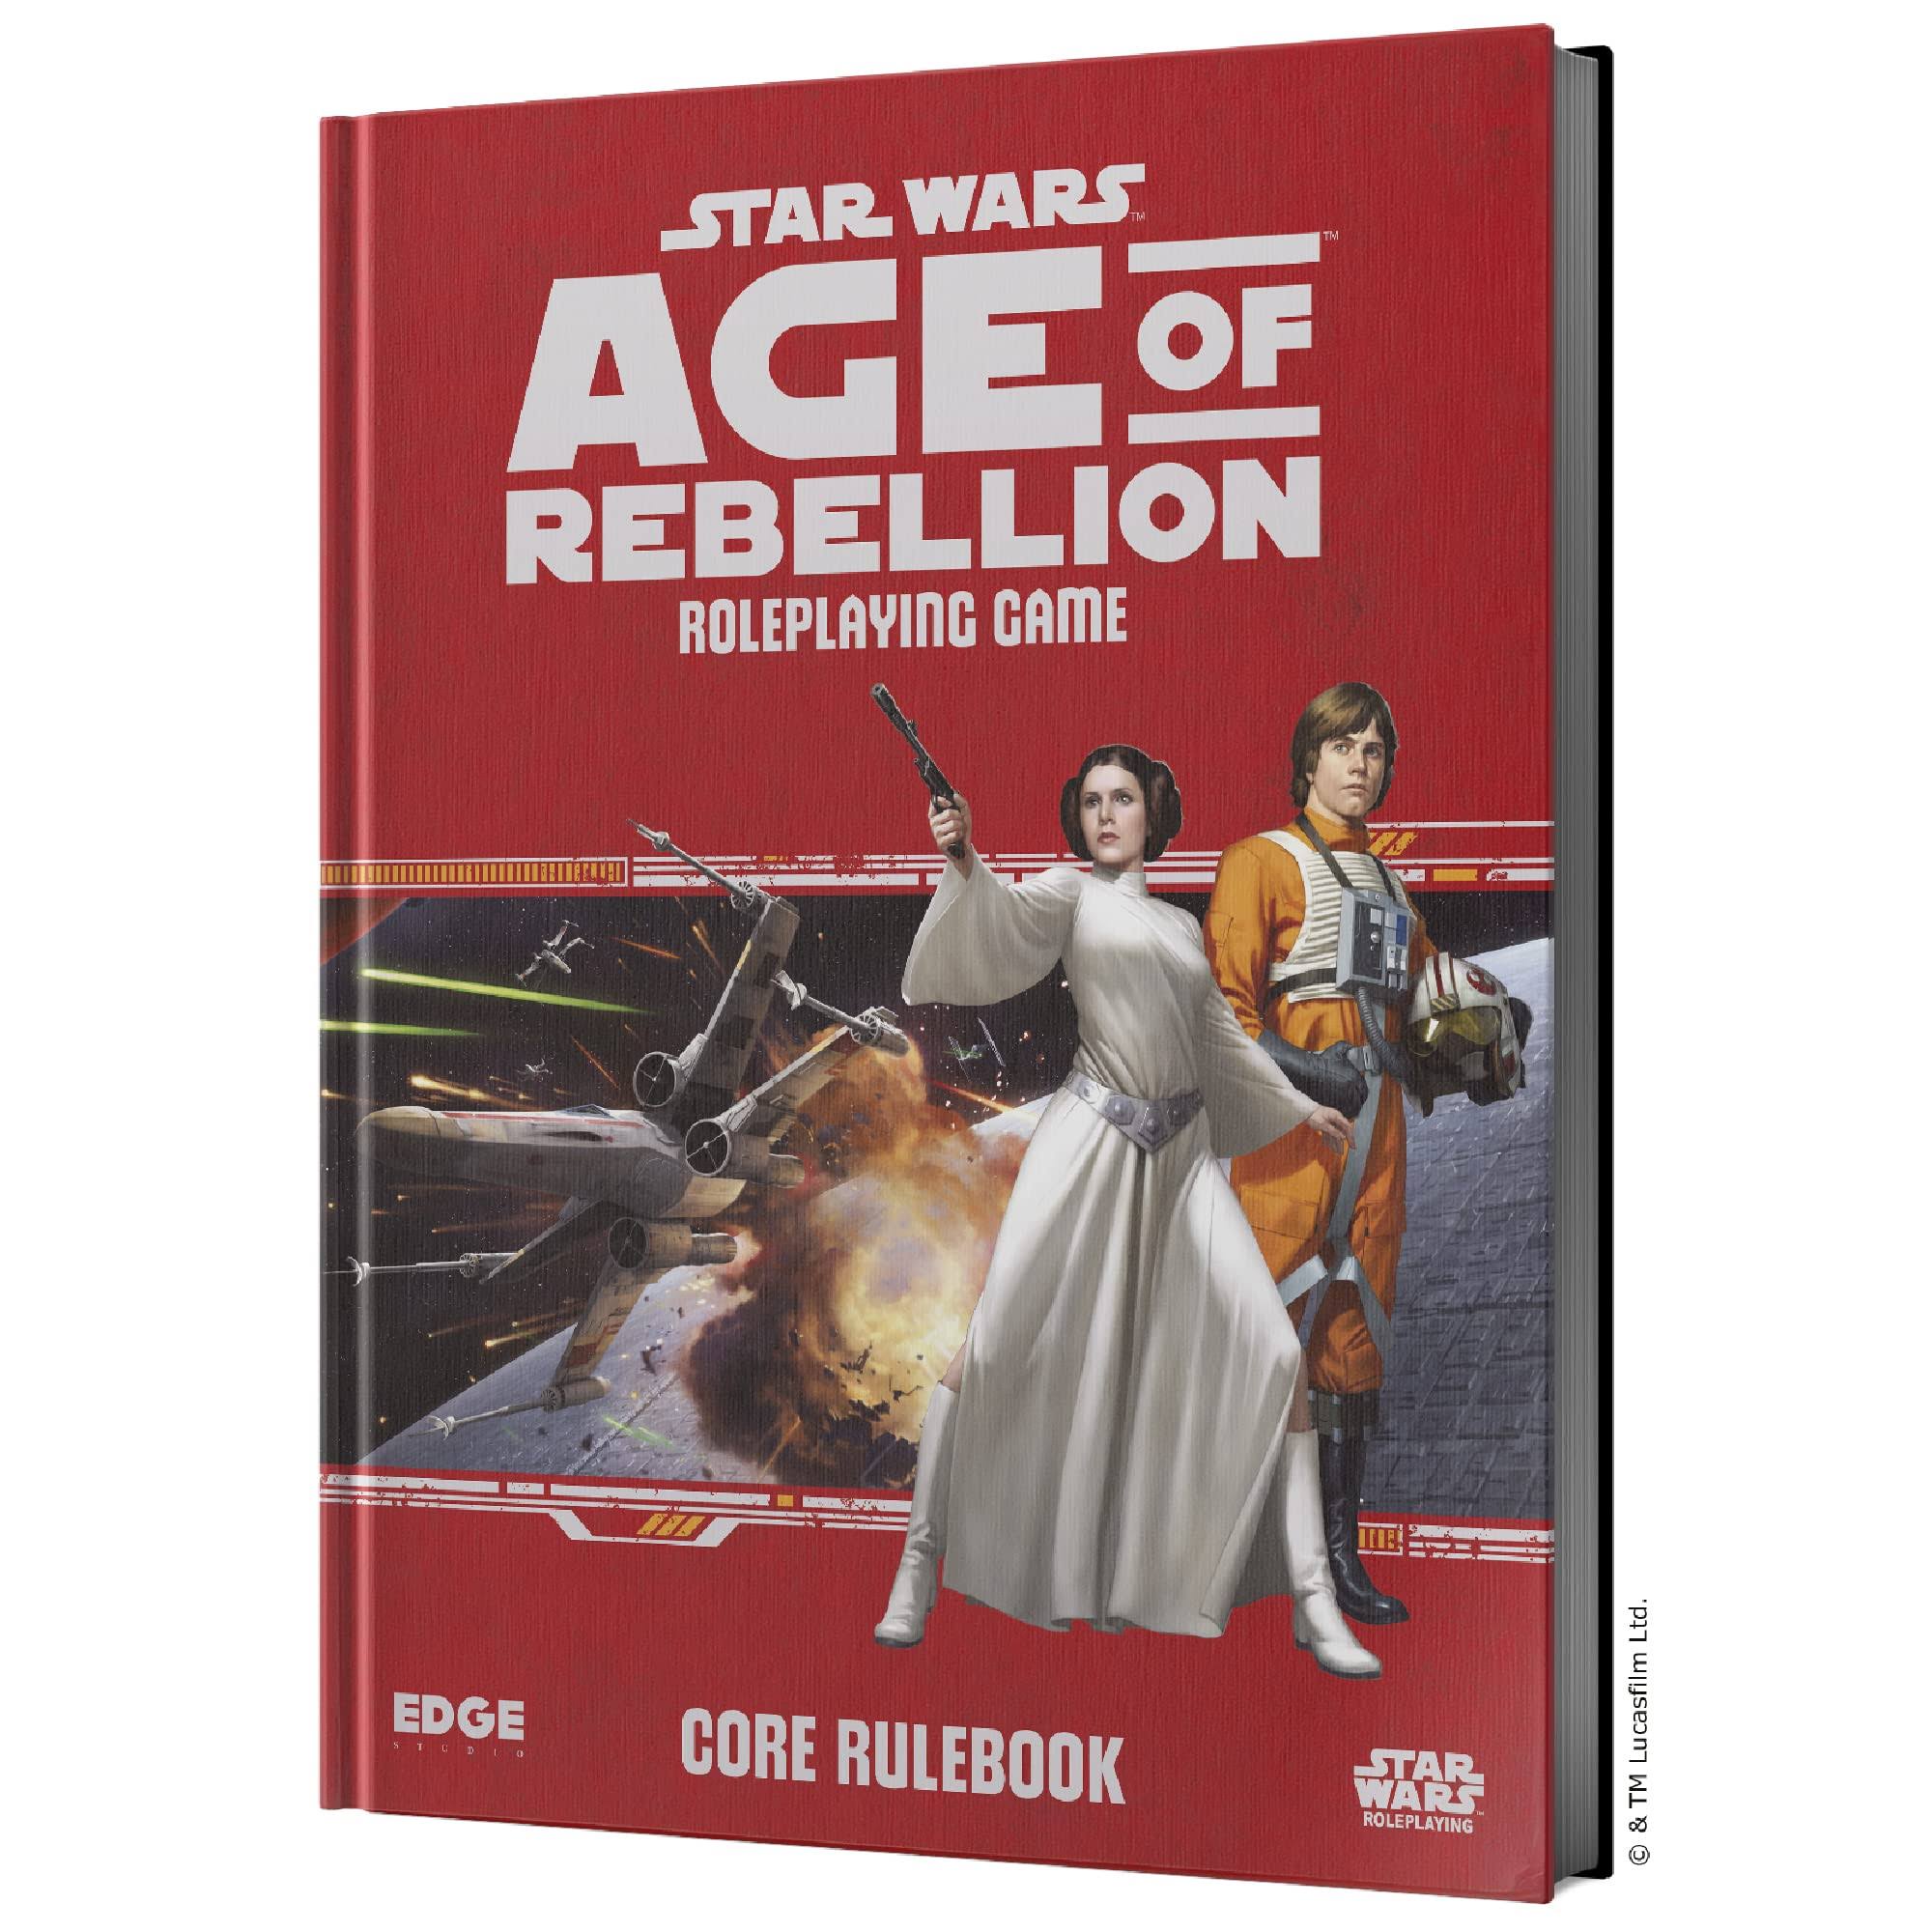 Star Wars Age of Rebellion RPG: Core Rulebook (Edge Studio Edition)